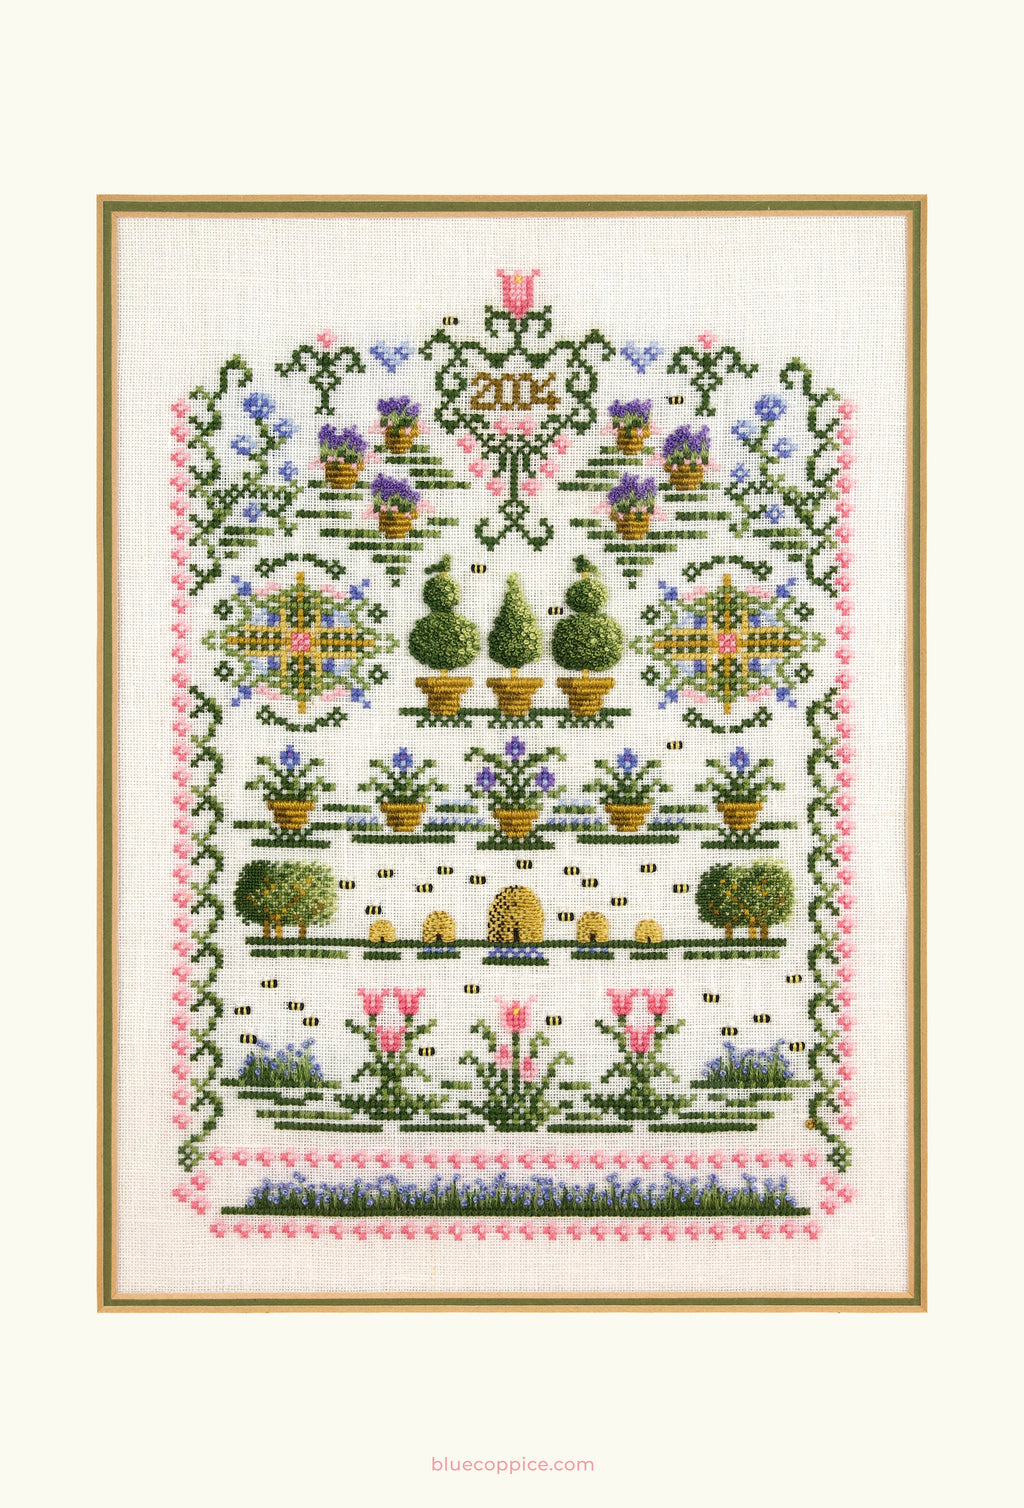 Floral Garden Sampler Tea Towel by Blue Coppice